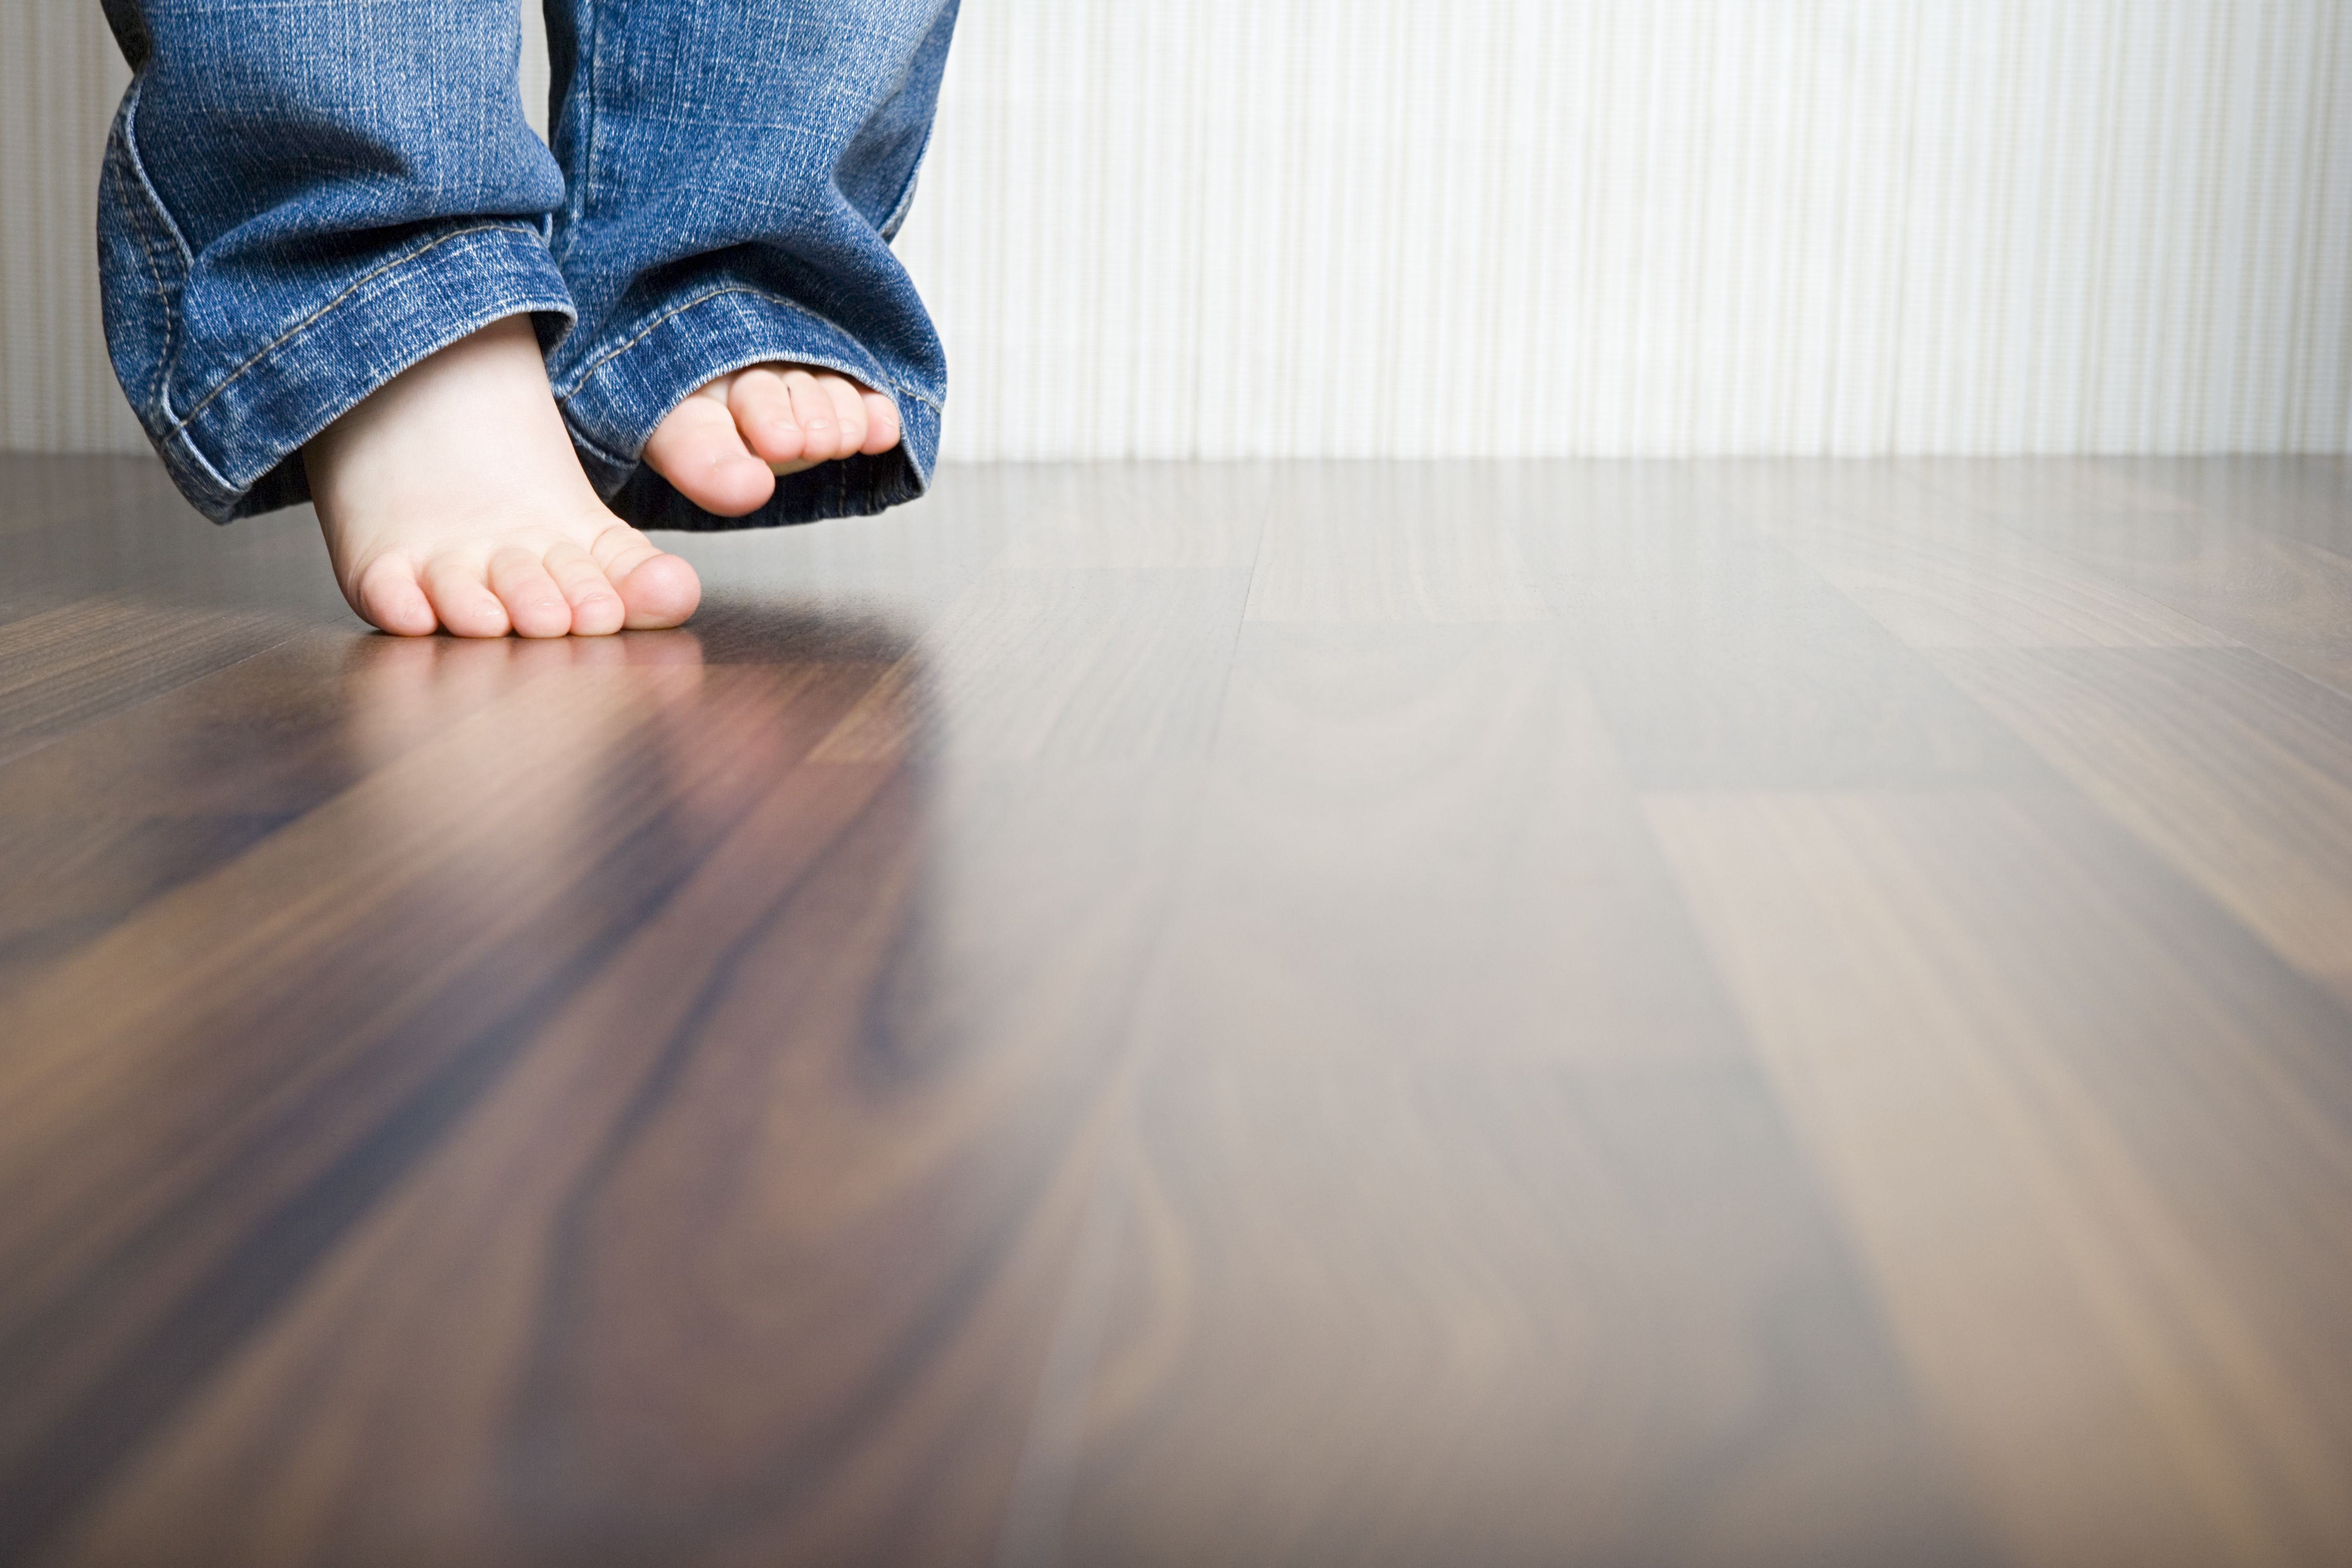 hardwood floor colors 2017 of how to clean hardwood floors best way to clean wood flooring intended for 1512149908 gettyimages 75403973